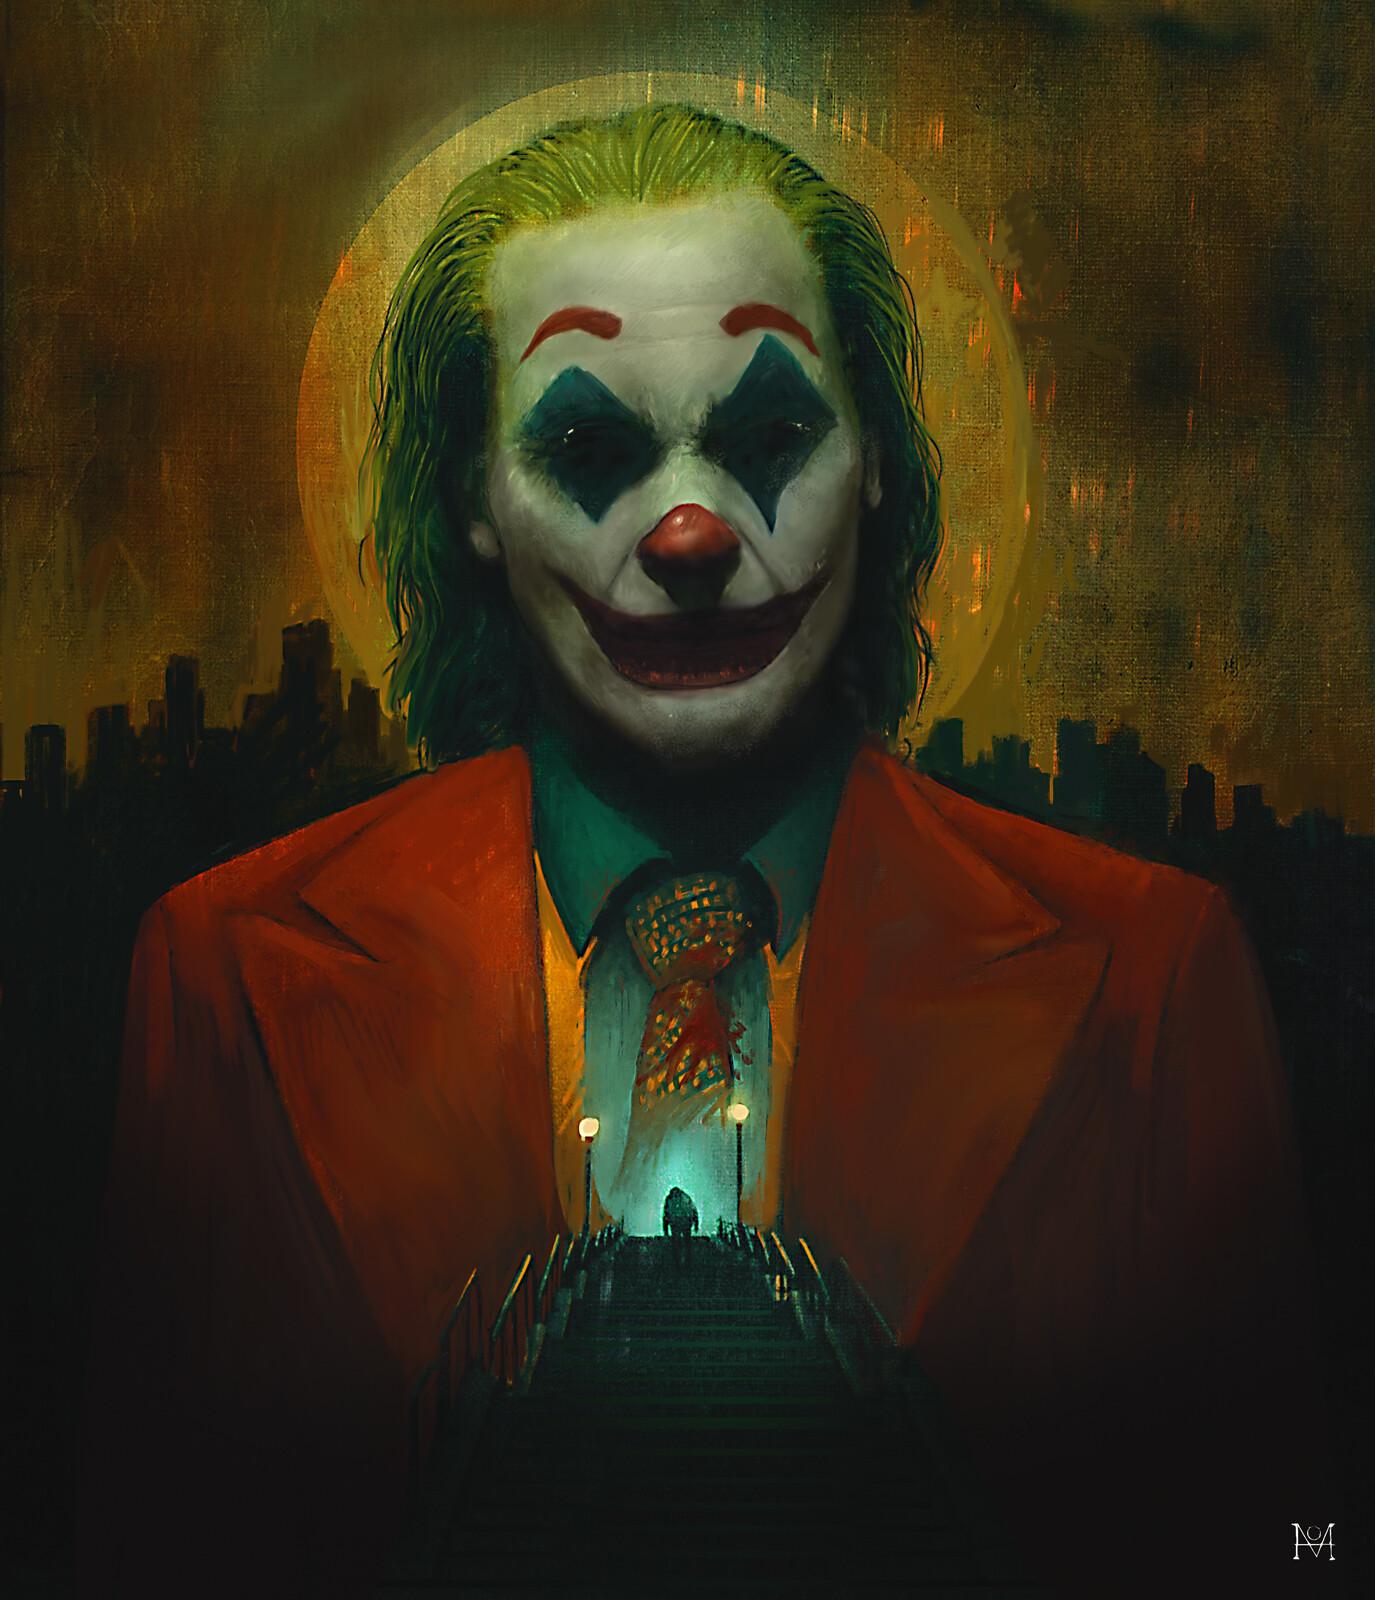 Joker 2019 Wallpapers - Wallpaper Cave